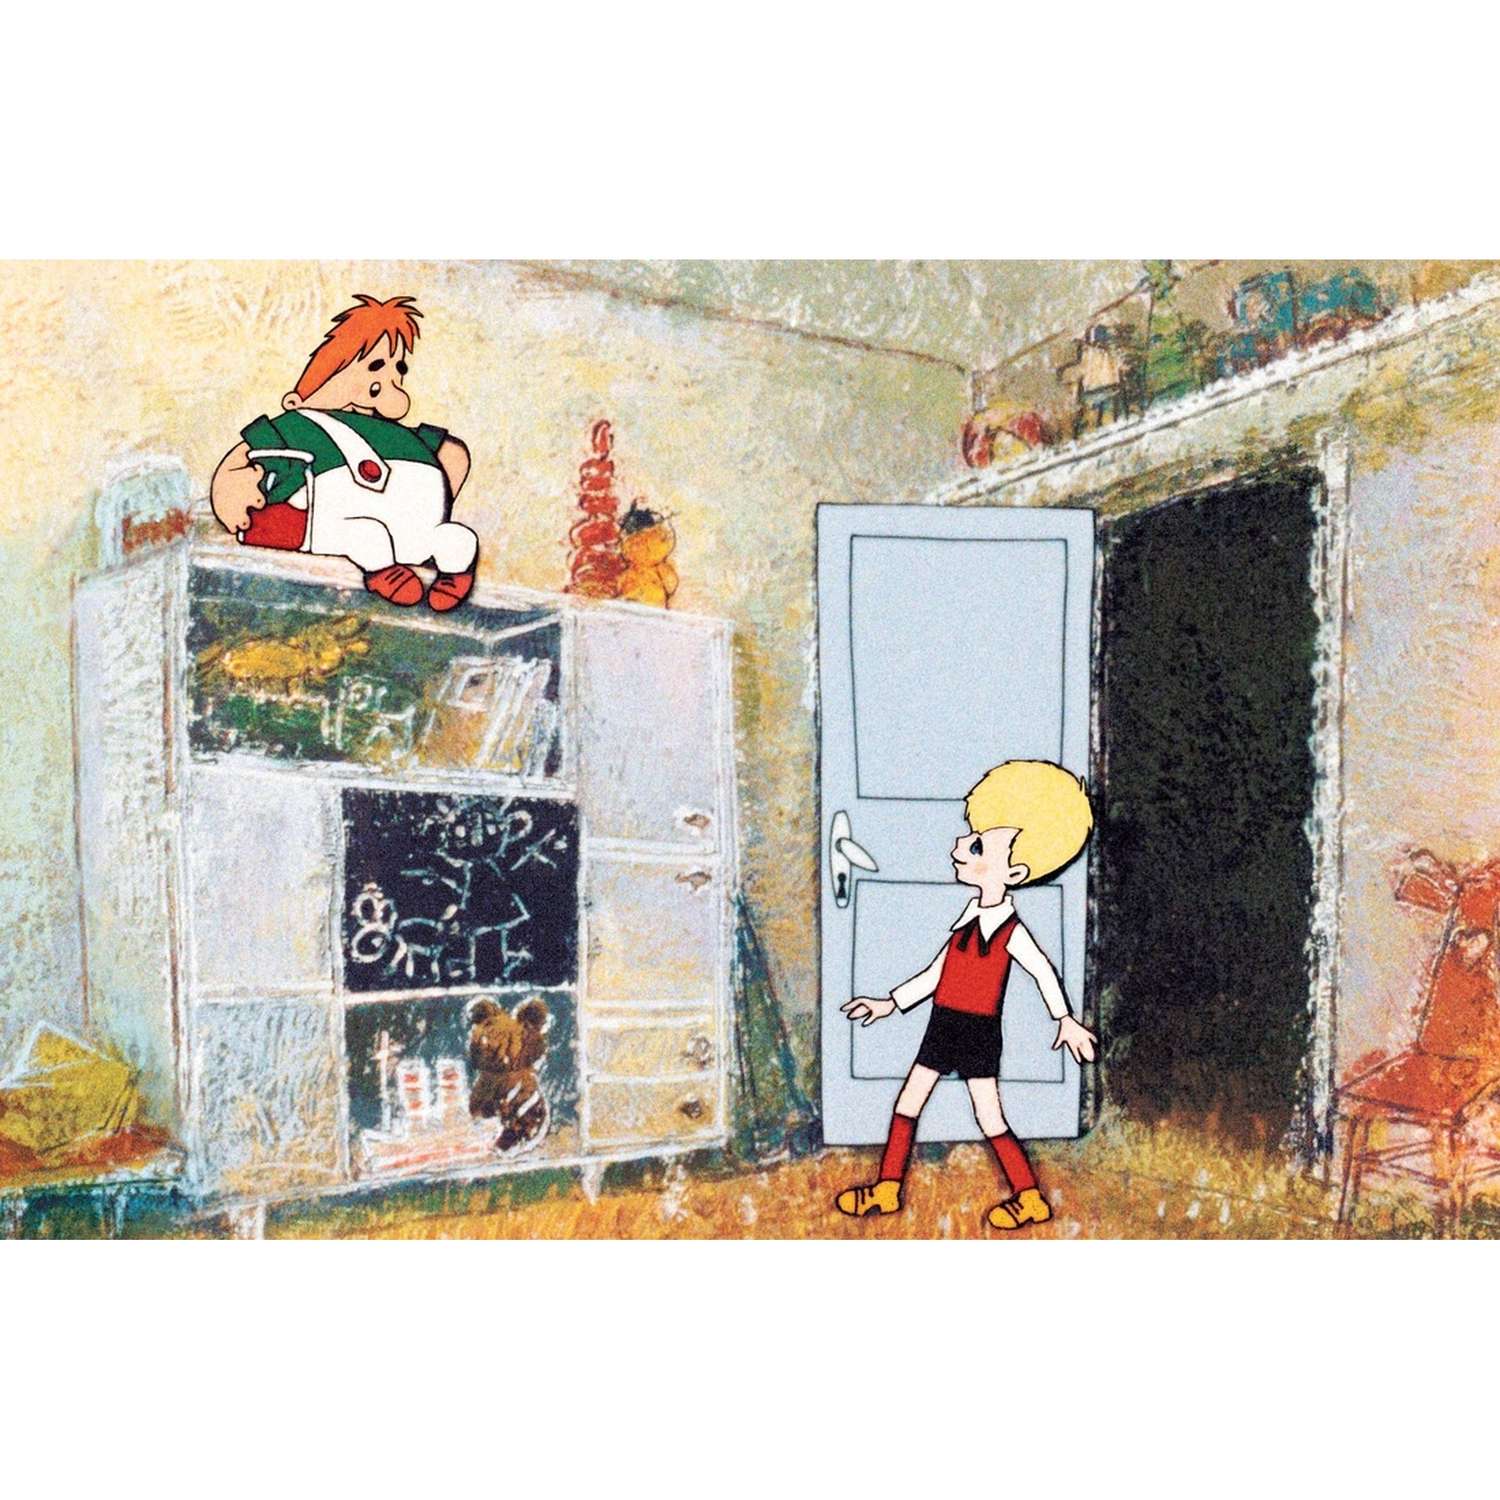 Книга Малыш и Карлсон который живёт на крыше Линдгрен иллюстрации Савченко - фото 7